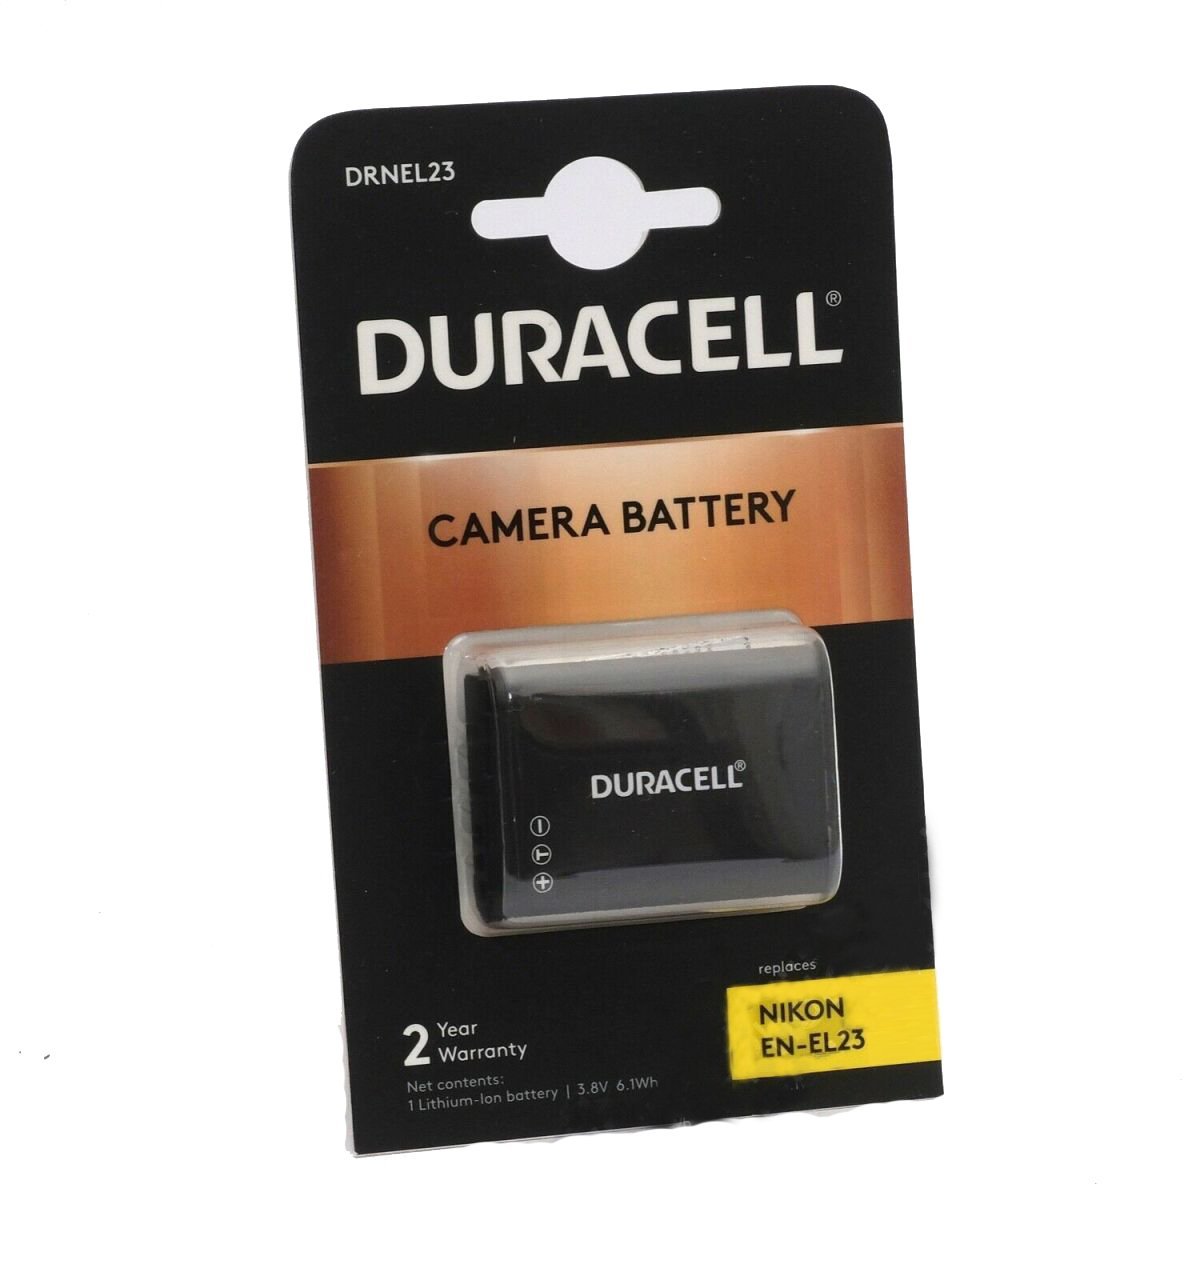 Duracell DRNEL23 Nikon EN-EL23 Batarya